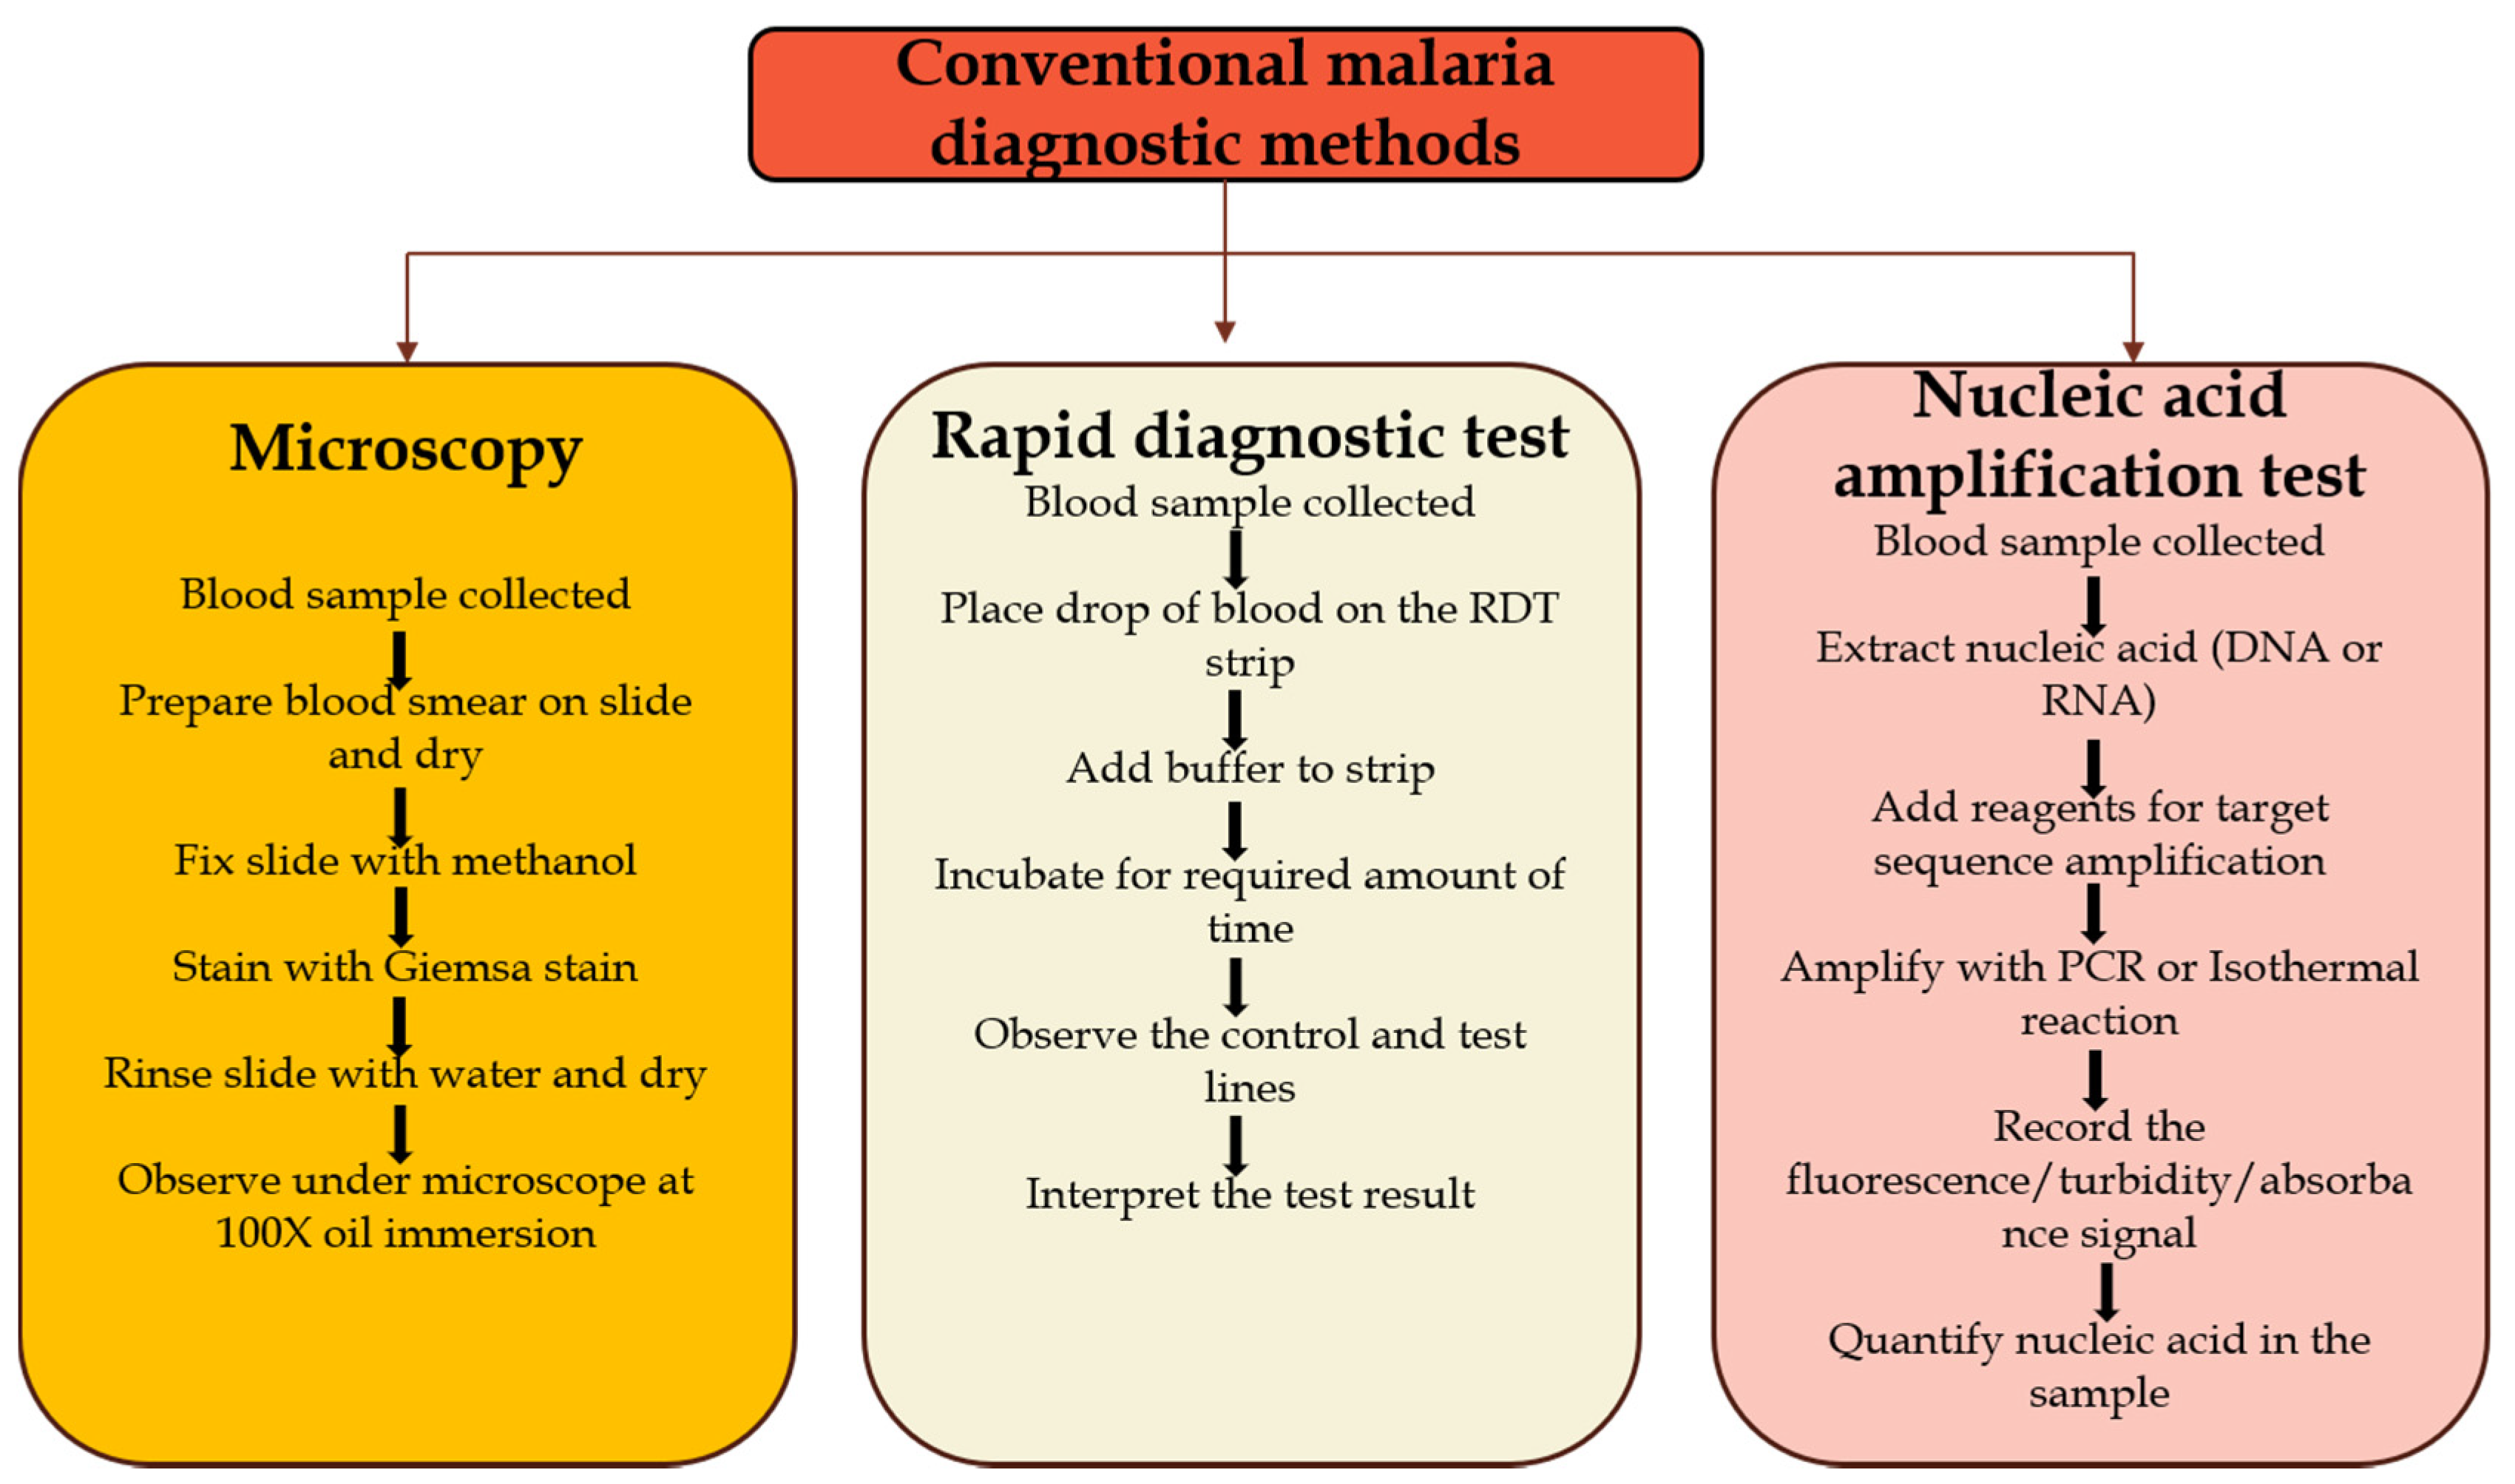 tropicalmed-free-full-text-evaluation-of-malaria-diagnostic-methods